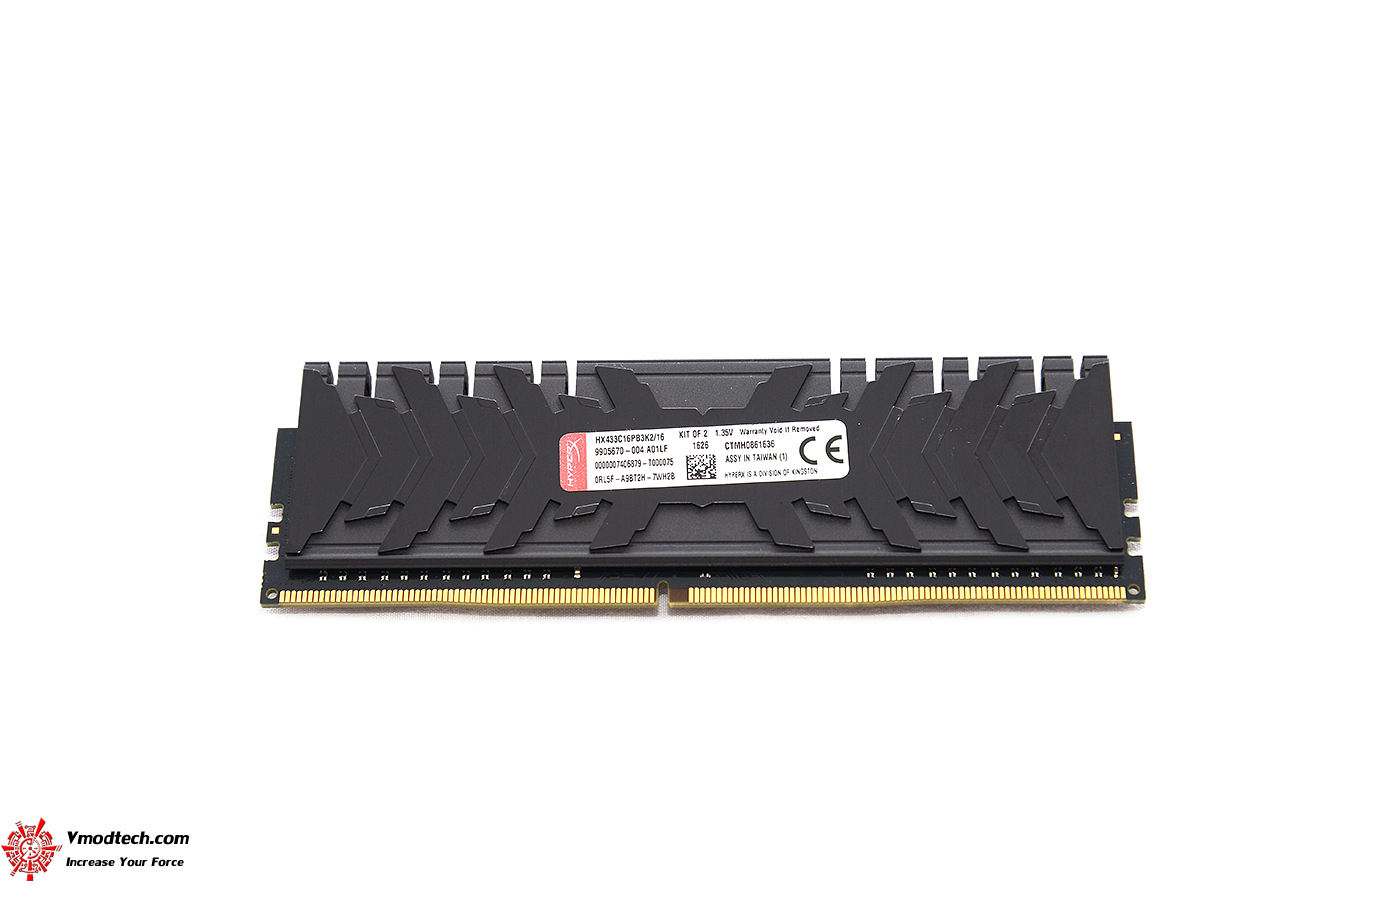 dsc 4985 HYPERX PREDATOR DDR4 3333MHz 16GB (2x8GB) CL16 REVIEW